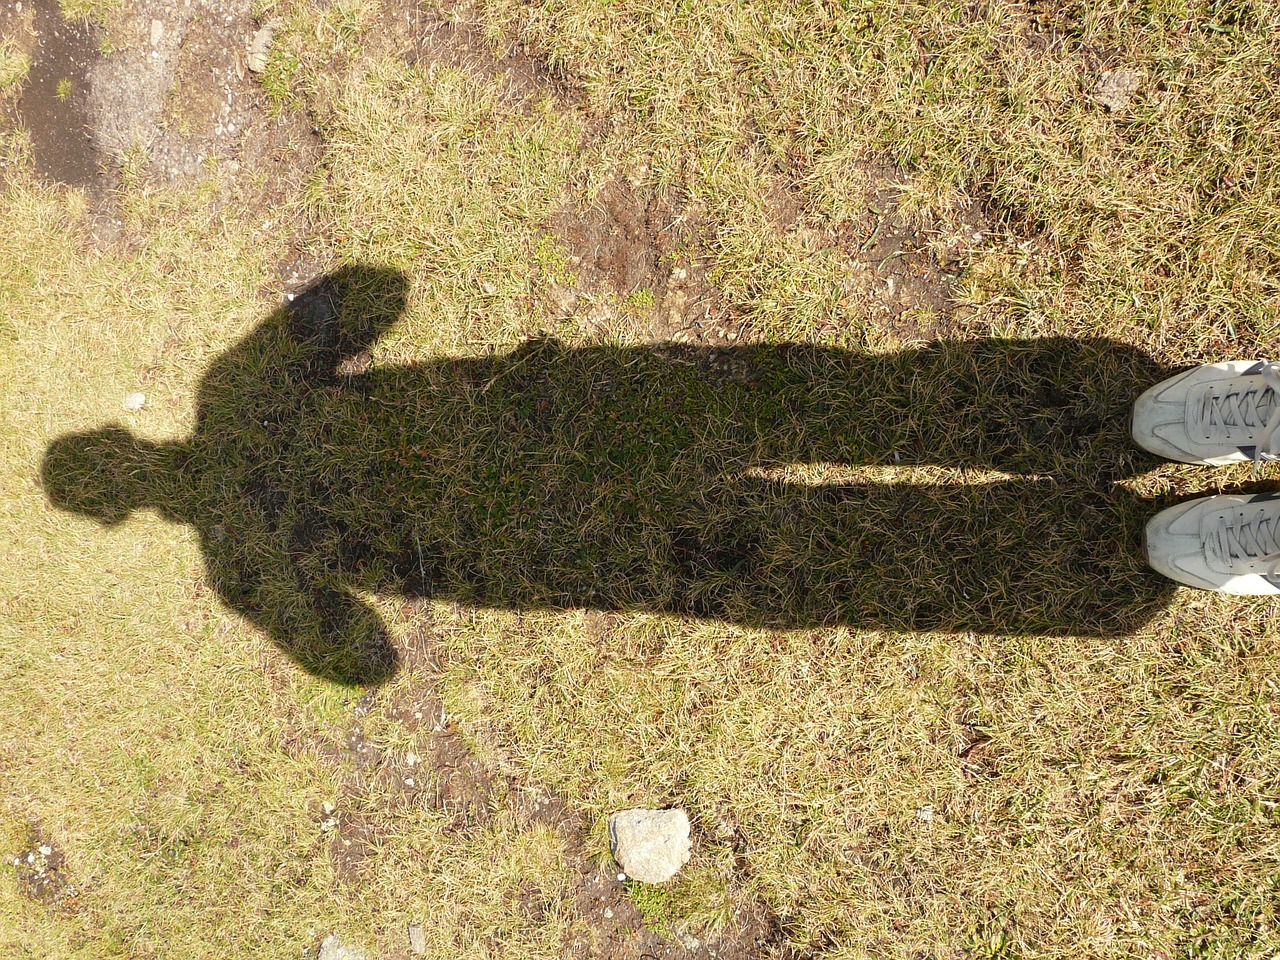 shadow shadow play human free photo